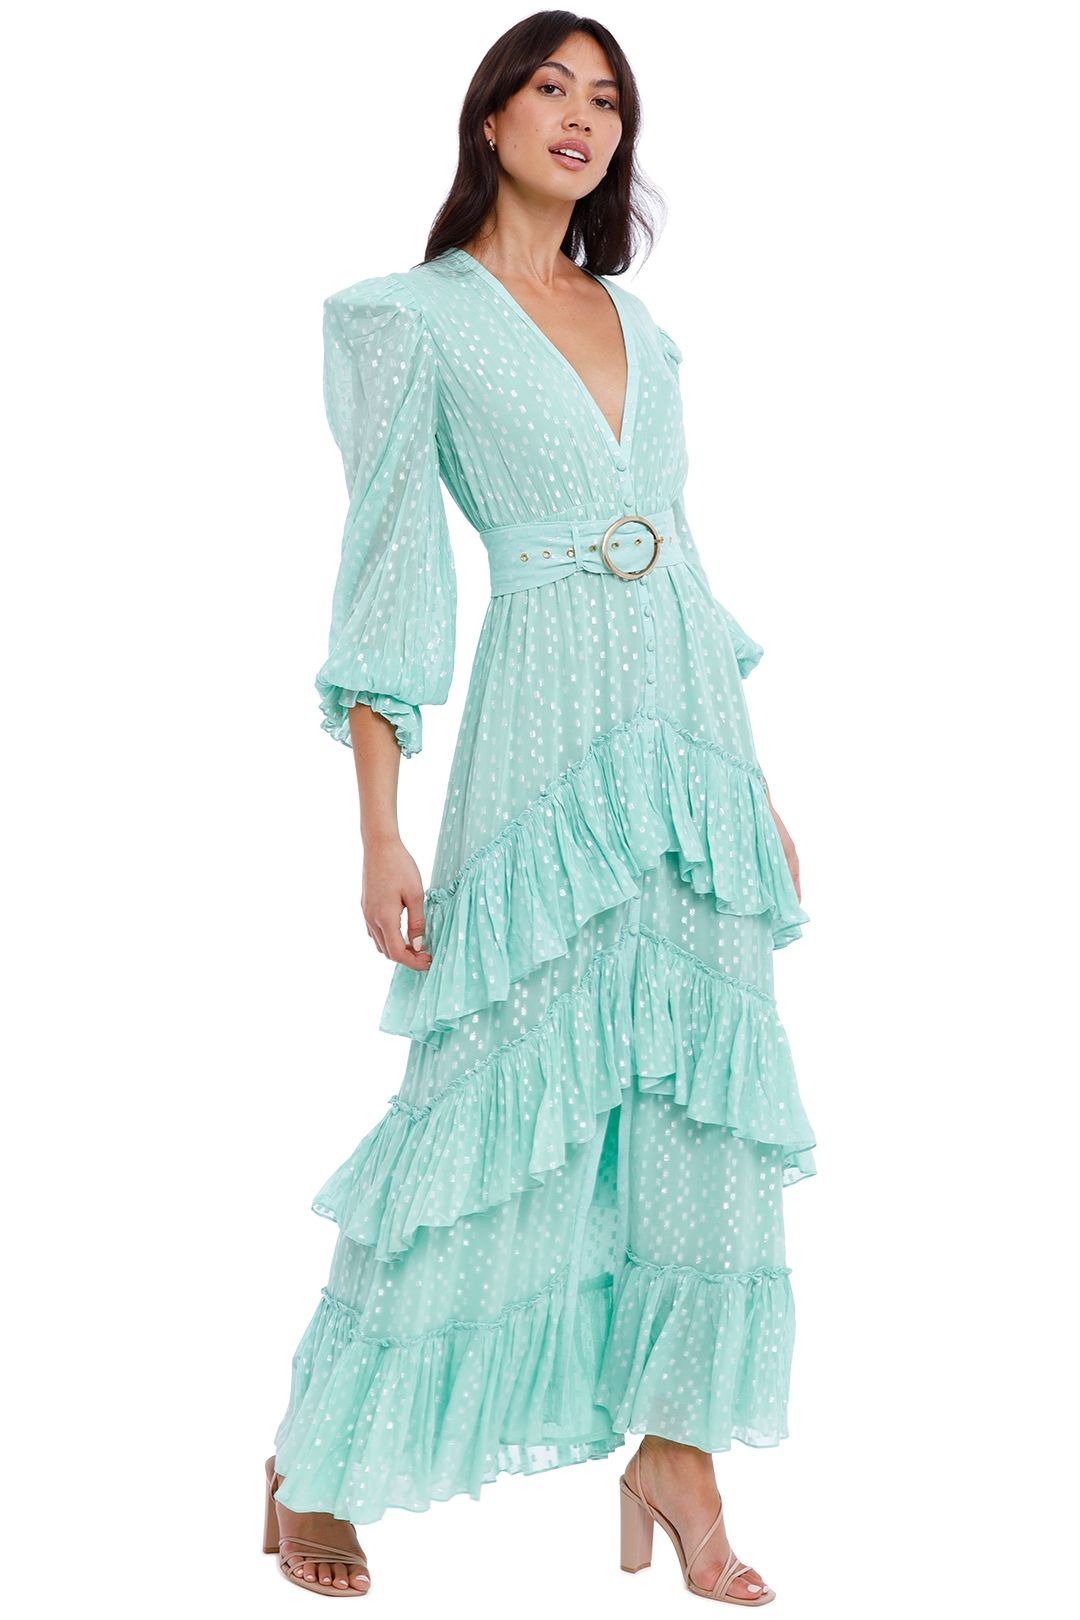 Rococo Sand Aria Ruffle Dress Mint maxi